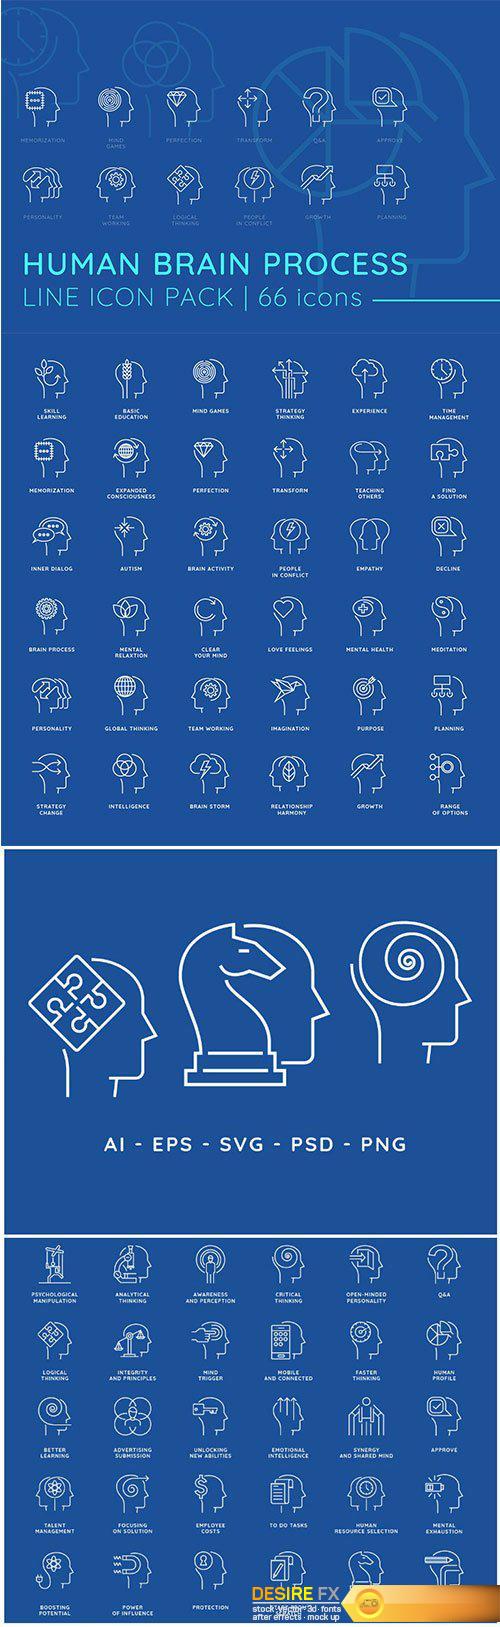 Human Brain Process Line Icons